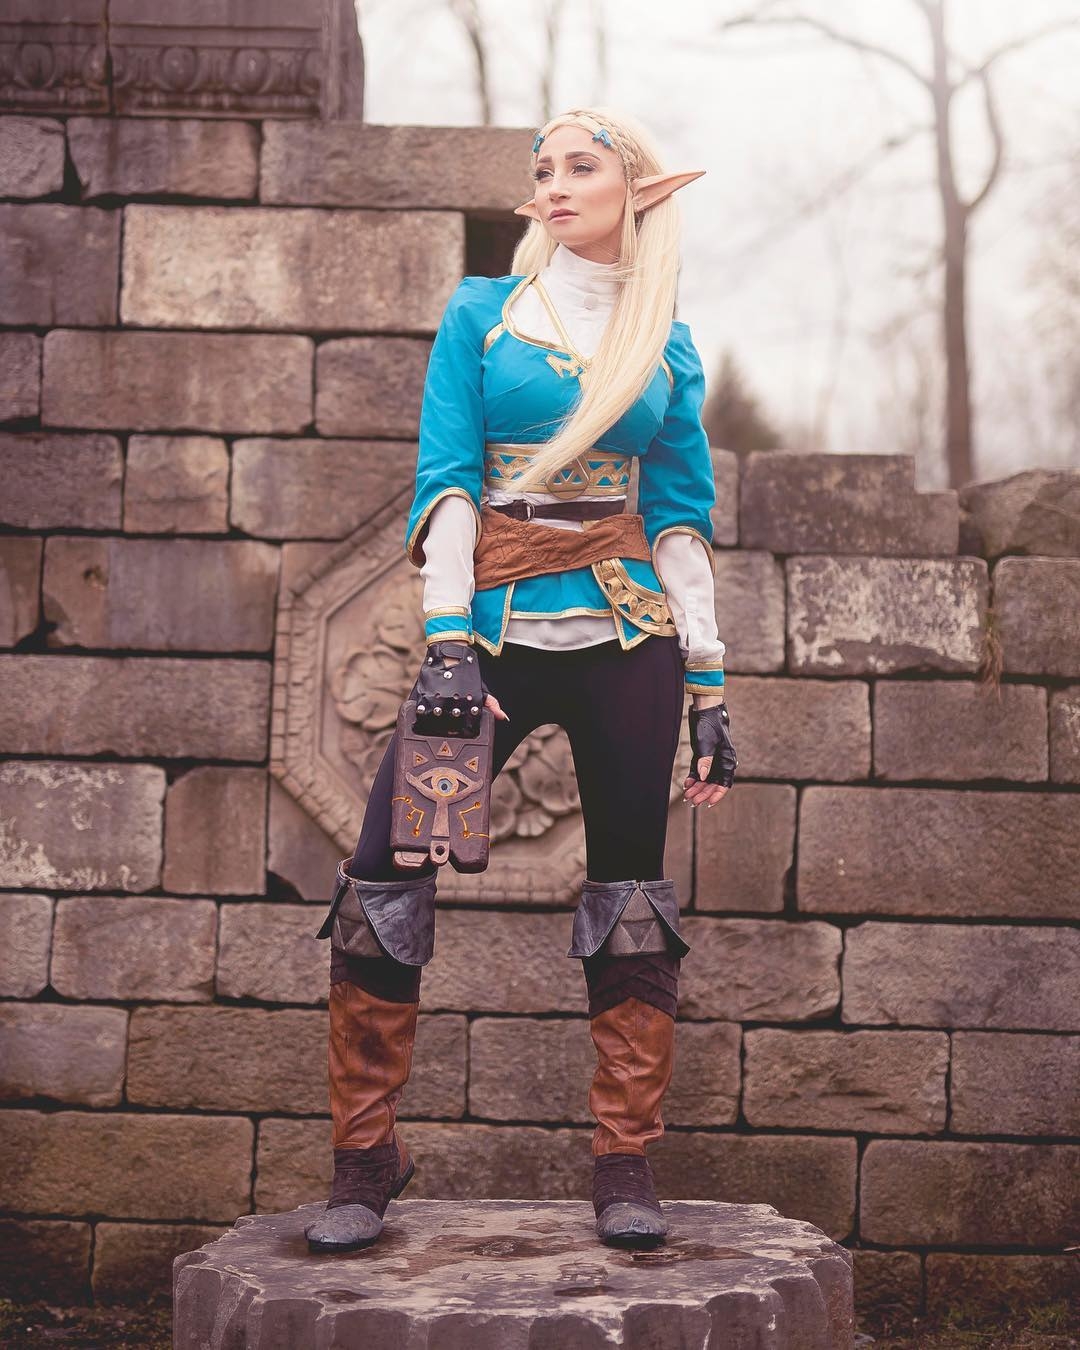 HollytWolf as Princess Zelda 29